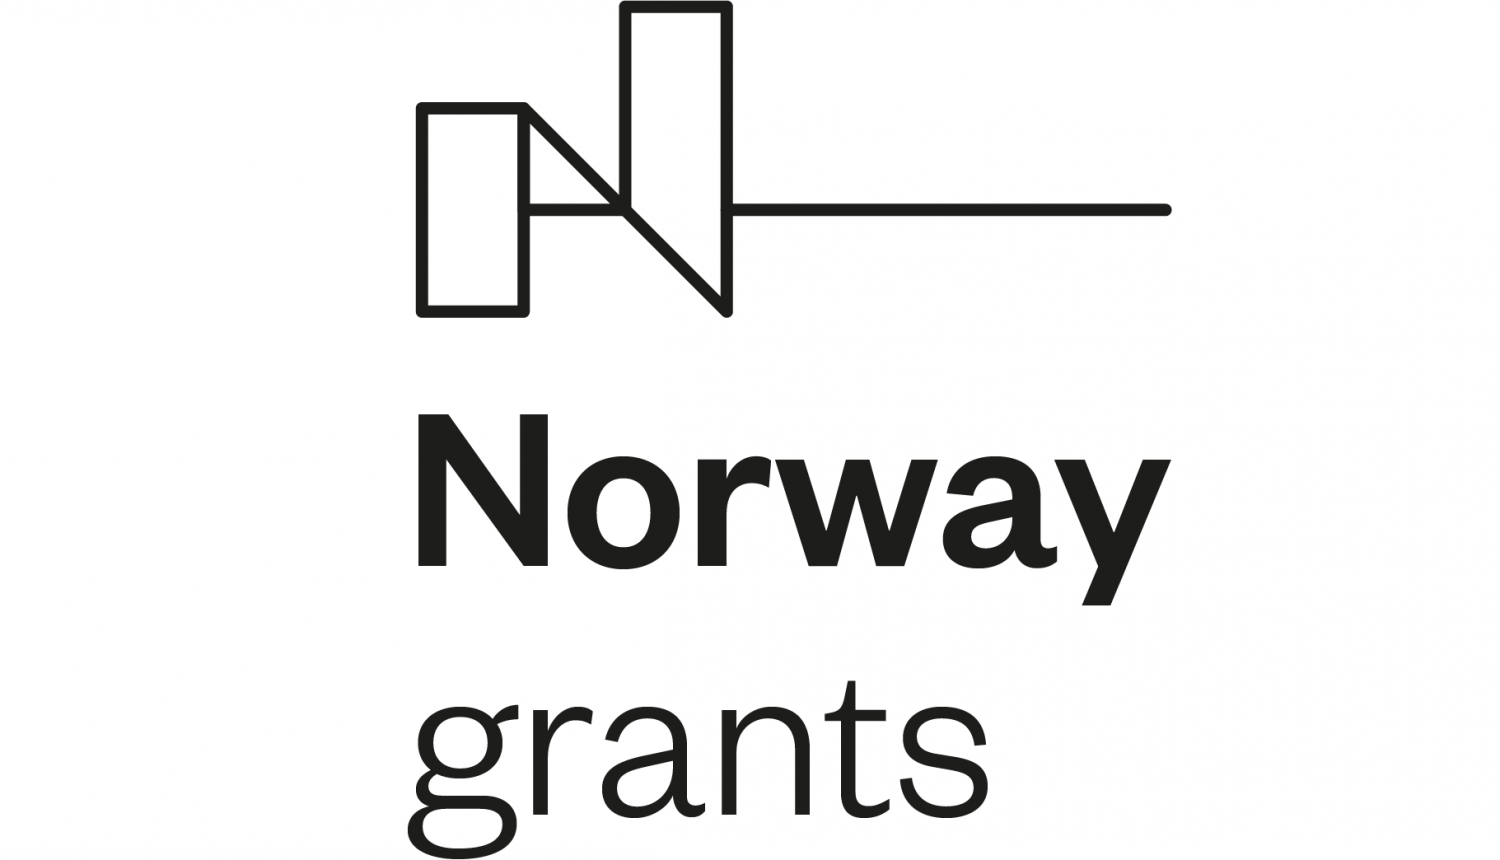 Logo - Norway grants